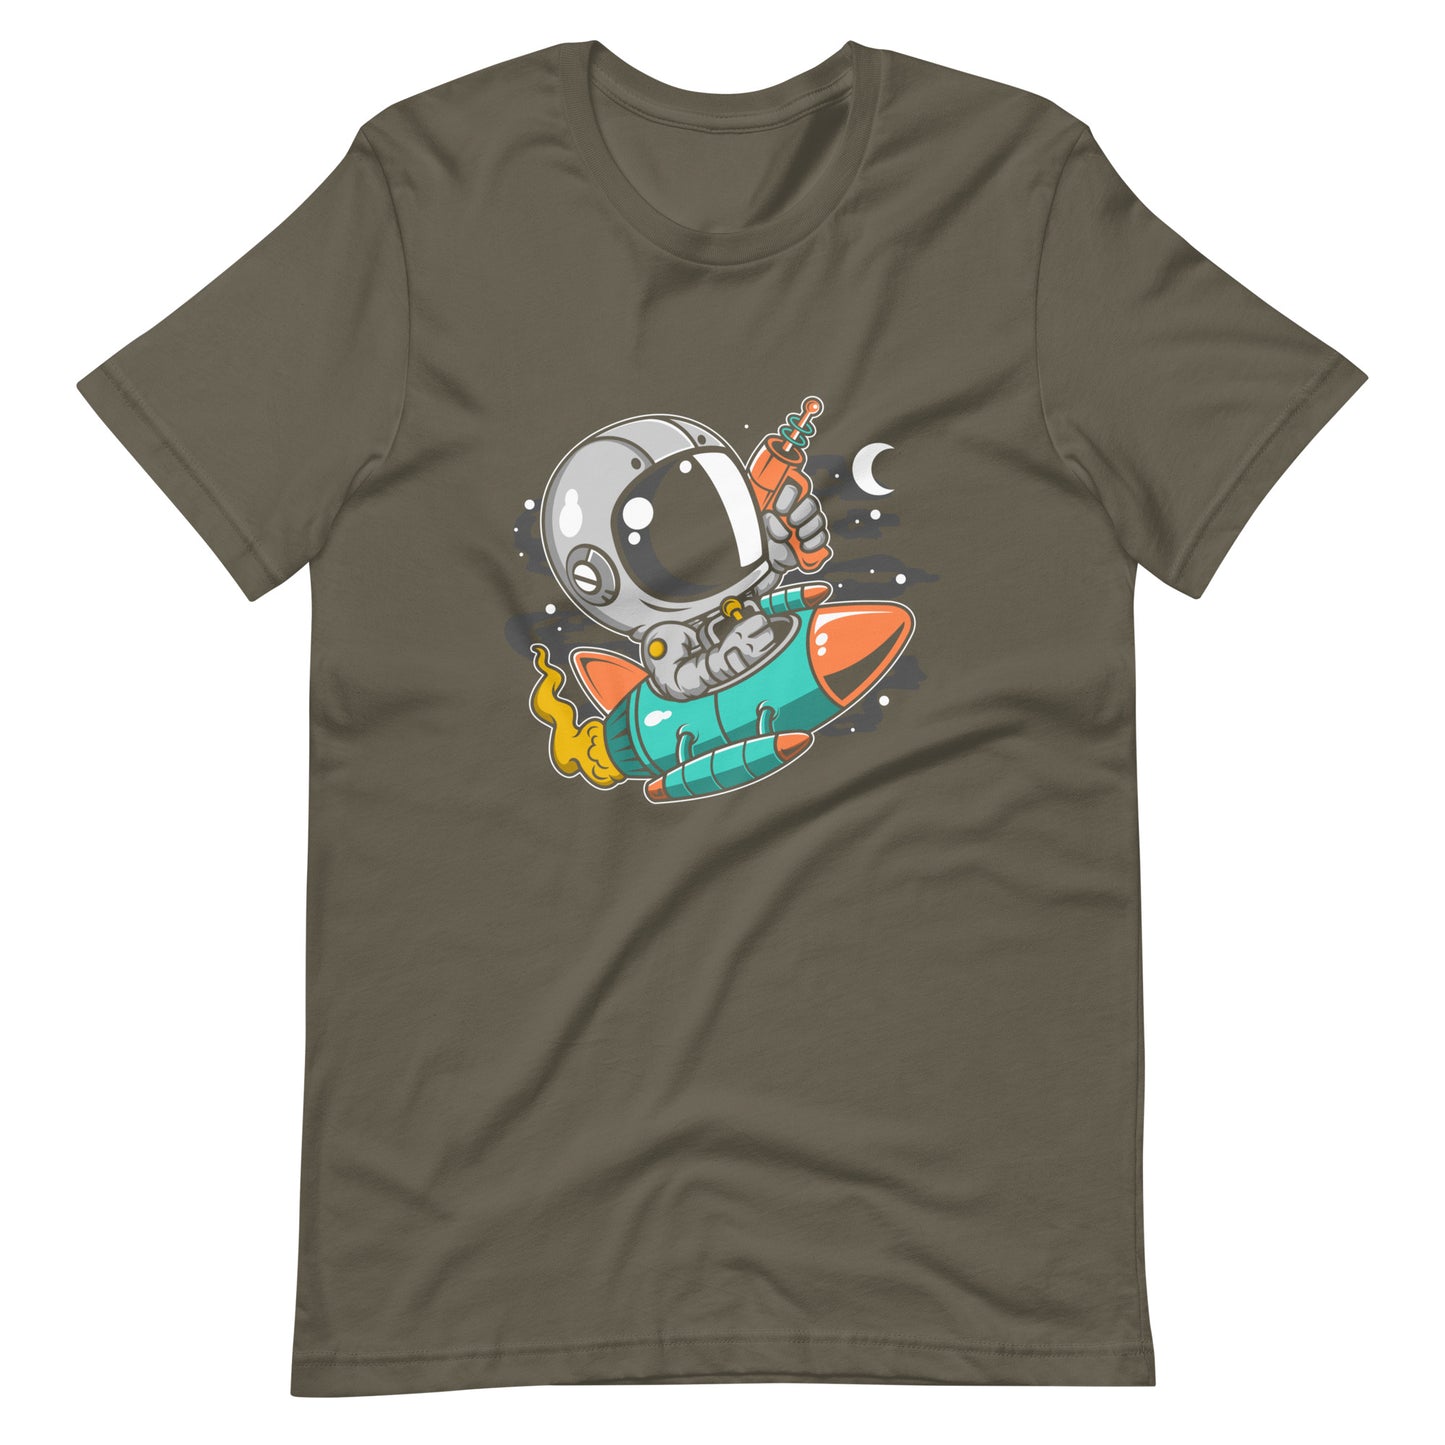 Astronaut Riding Rocket - Men's t-shirt - Army Front